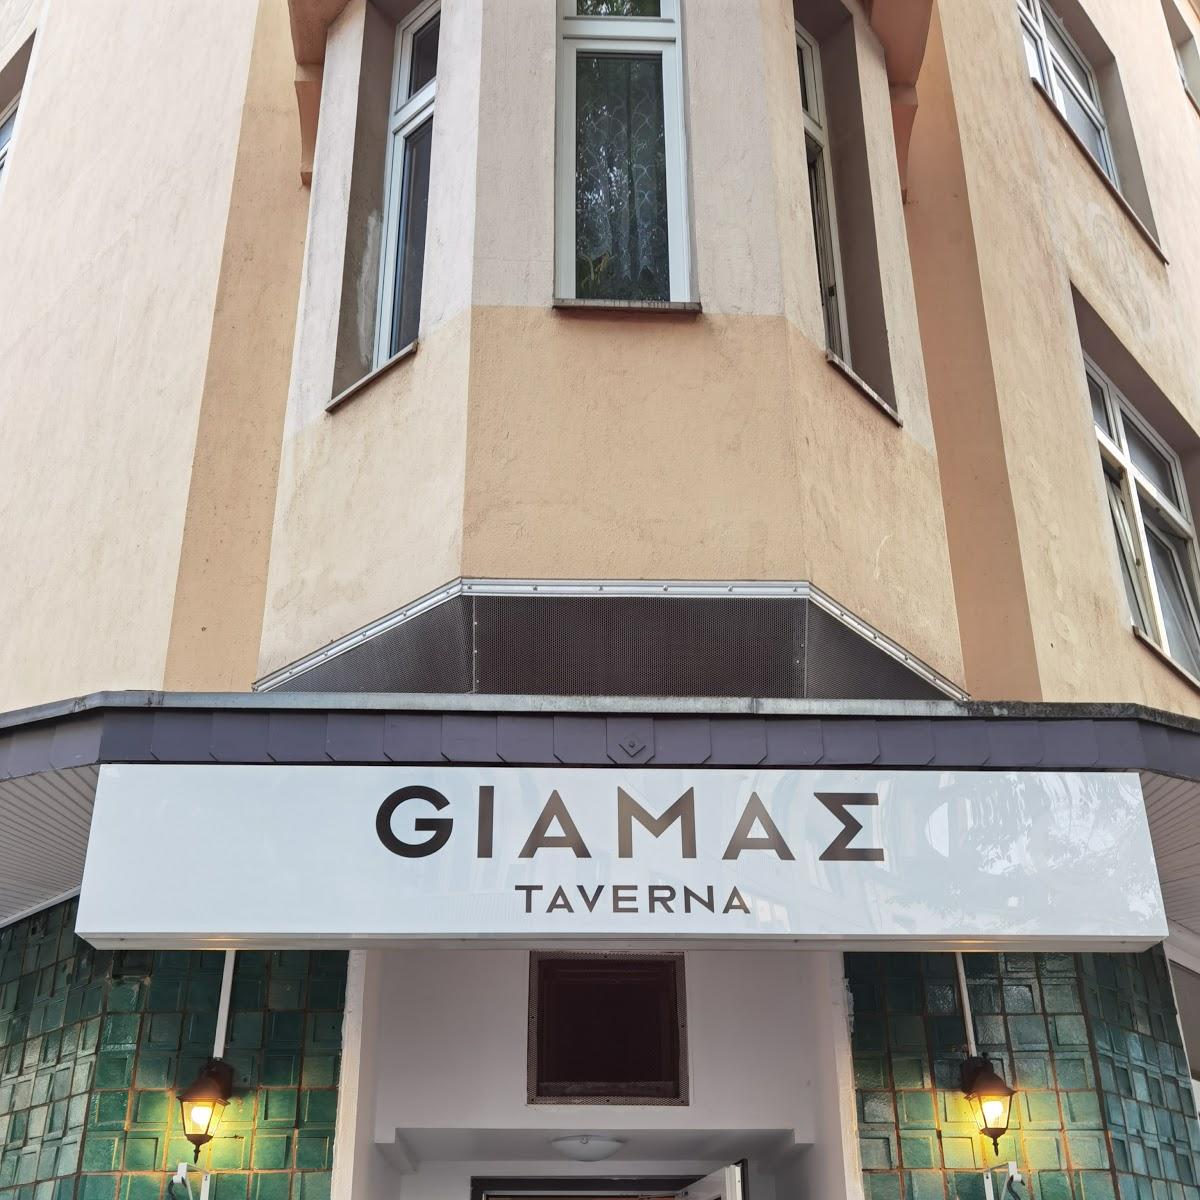 Restaurant "Giamas Taverna" in Düsseldorf